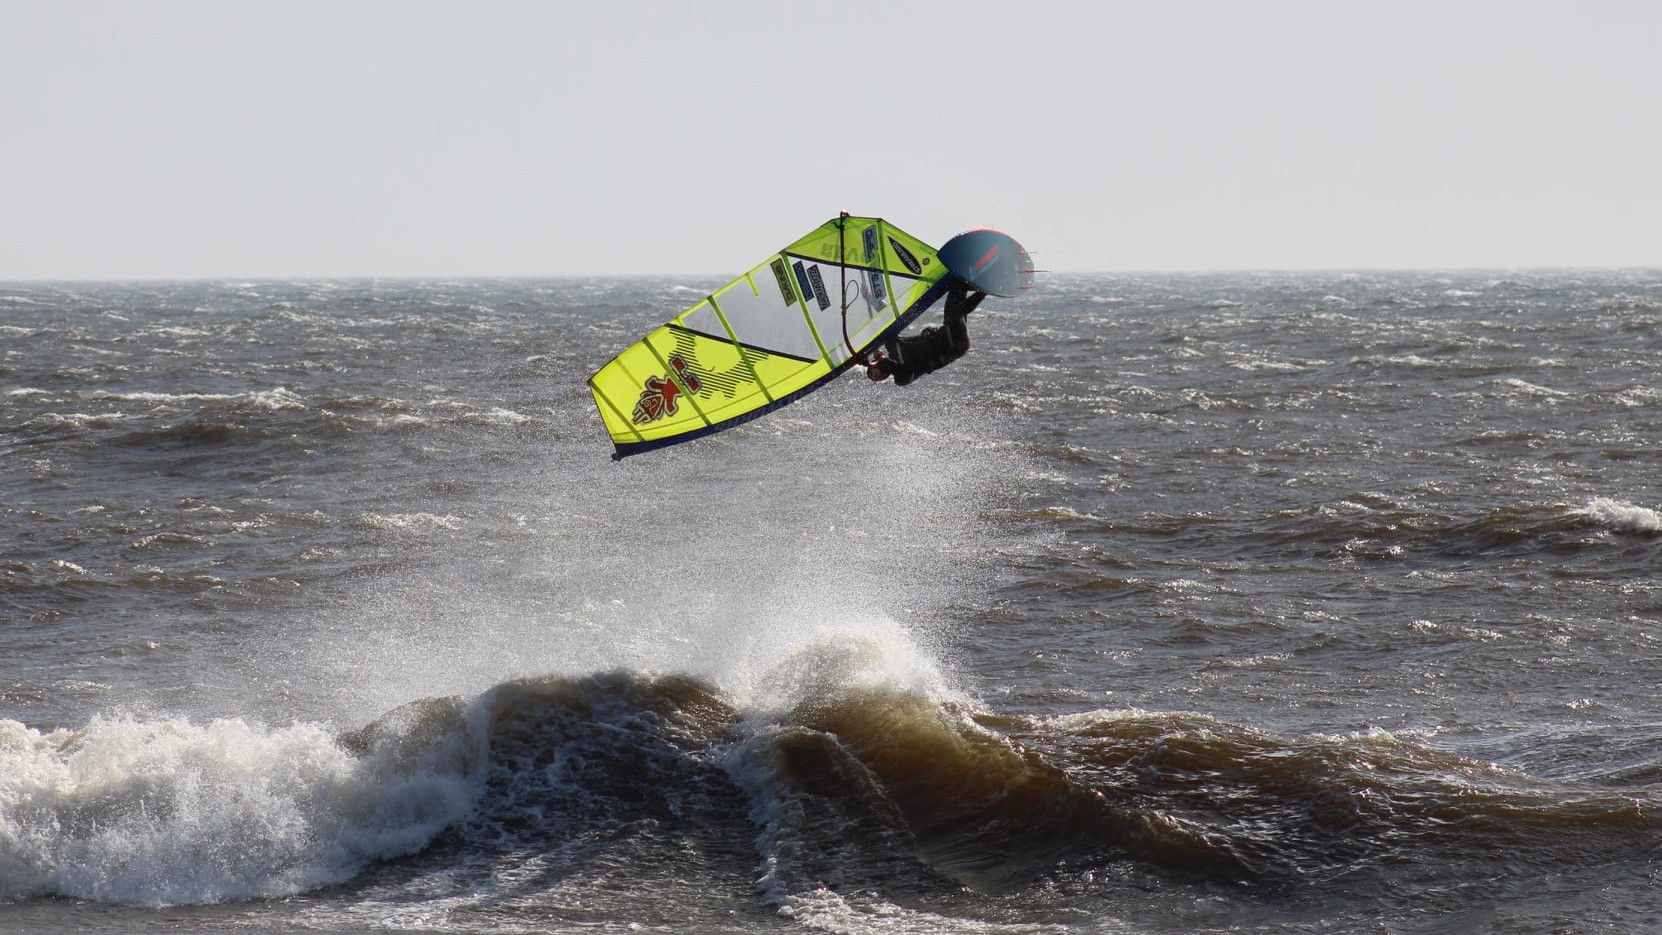 Windsurfing jump by Phil Soltysiak